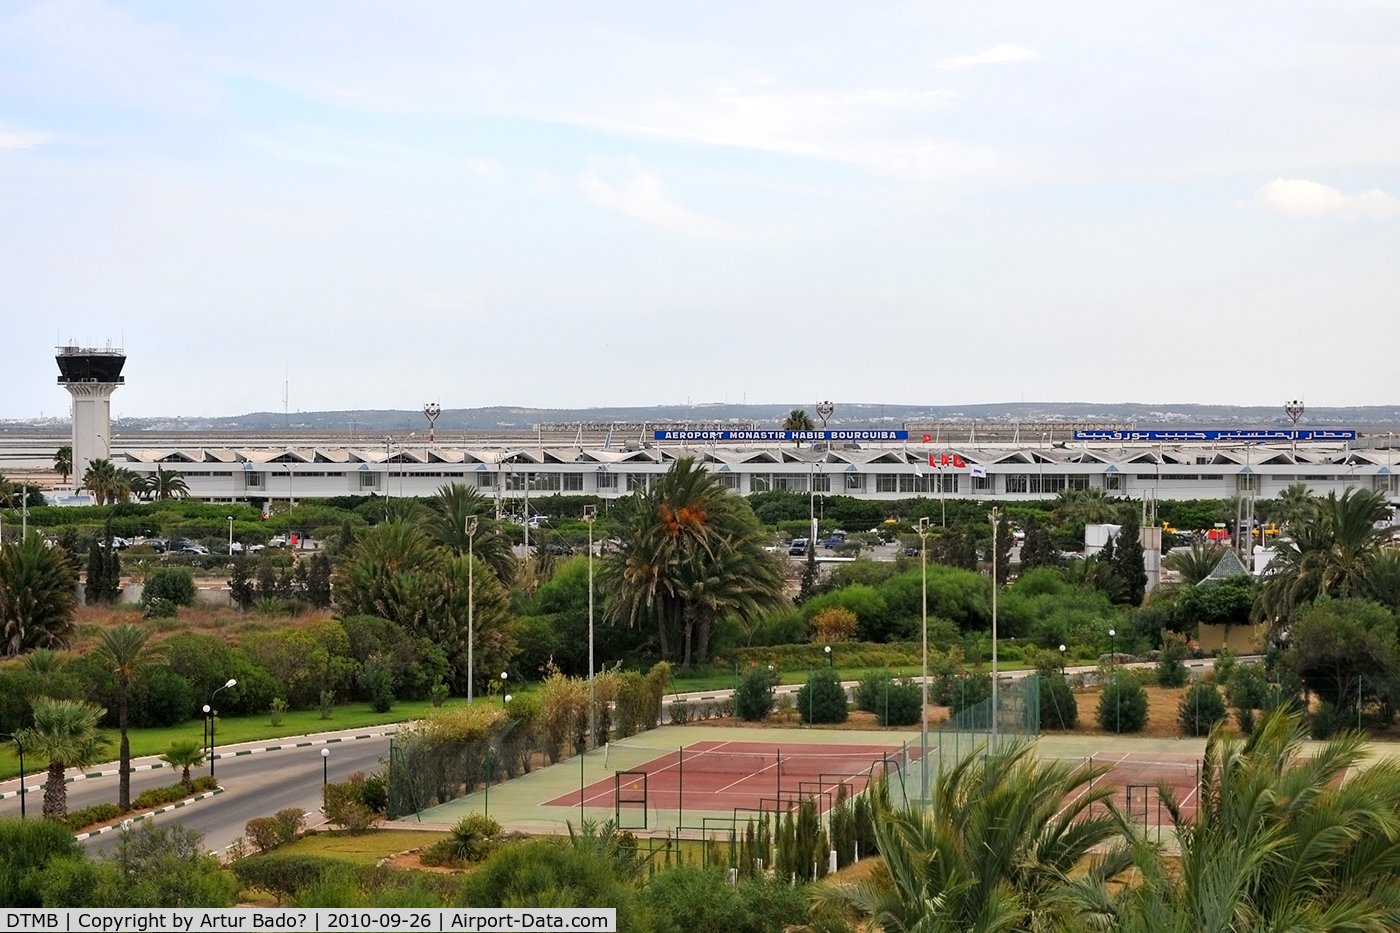 Habib Bourguiba International Airport, Monastir Tunisia (DTMB) - Terminal